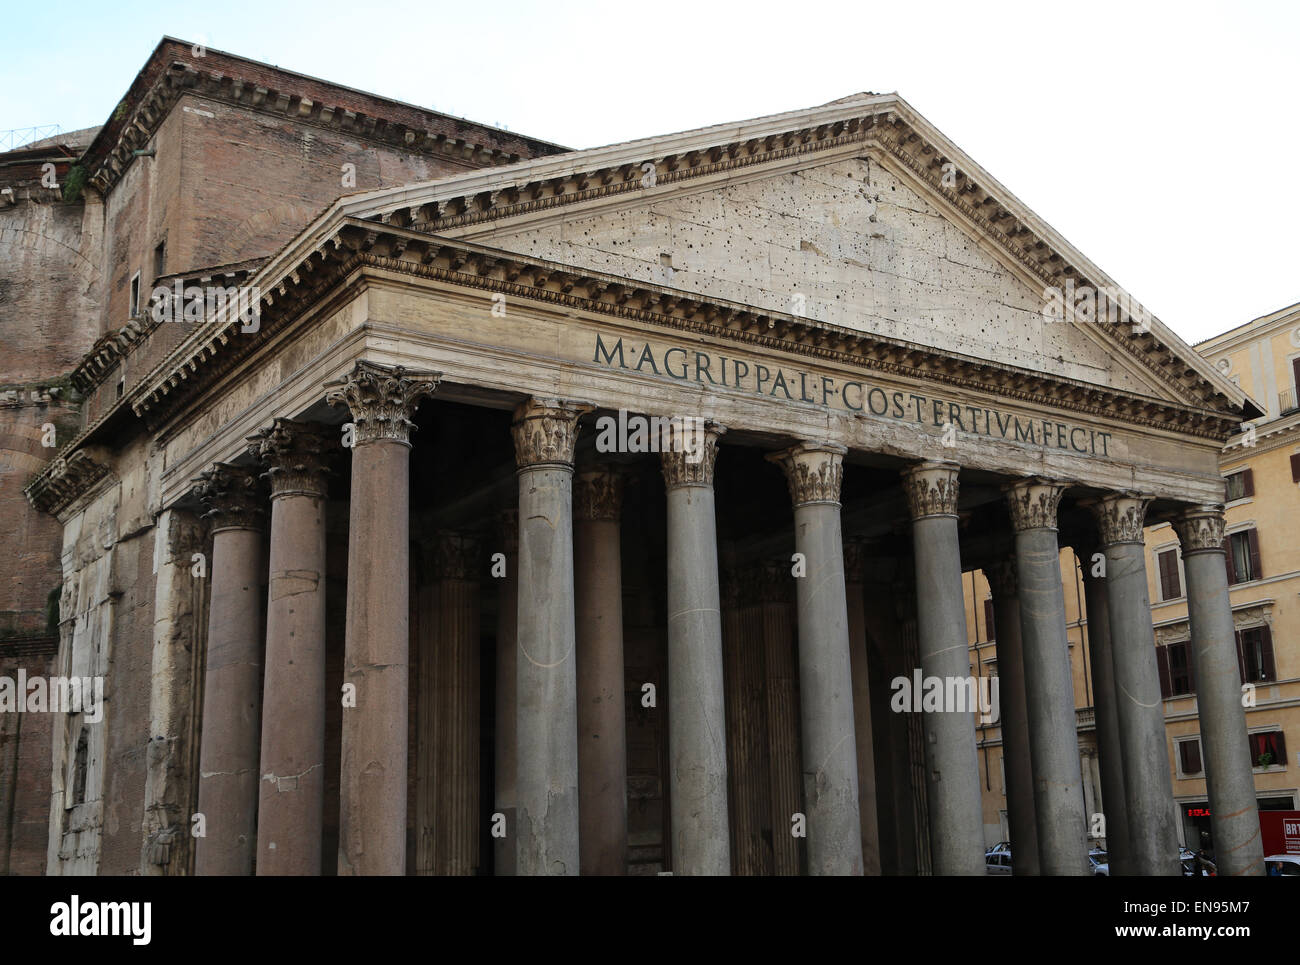 Italy. Rome. Pantheon. Roman temple. Exterior. Stock Photo